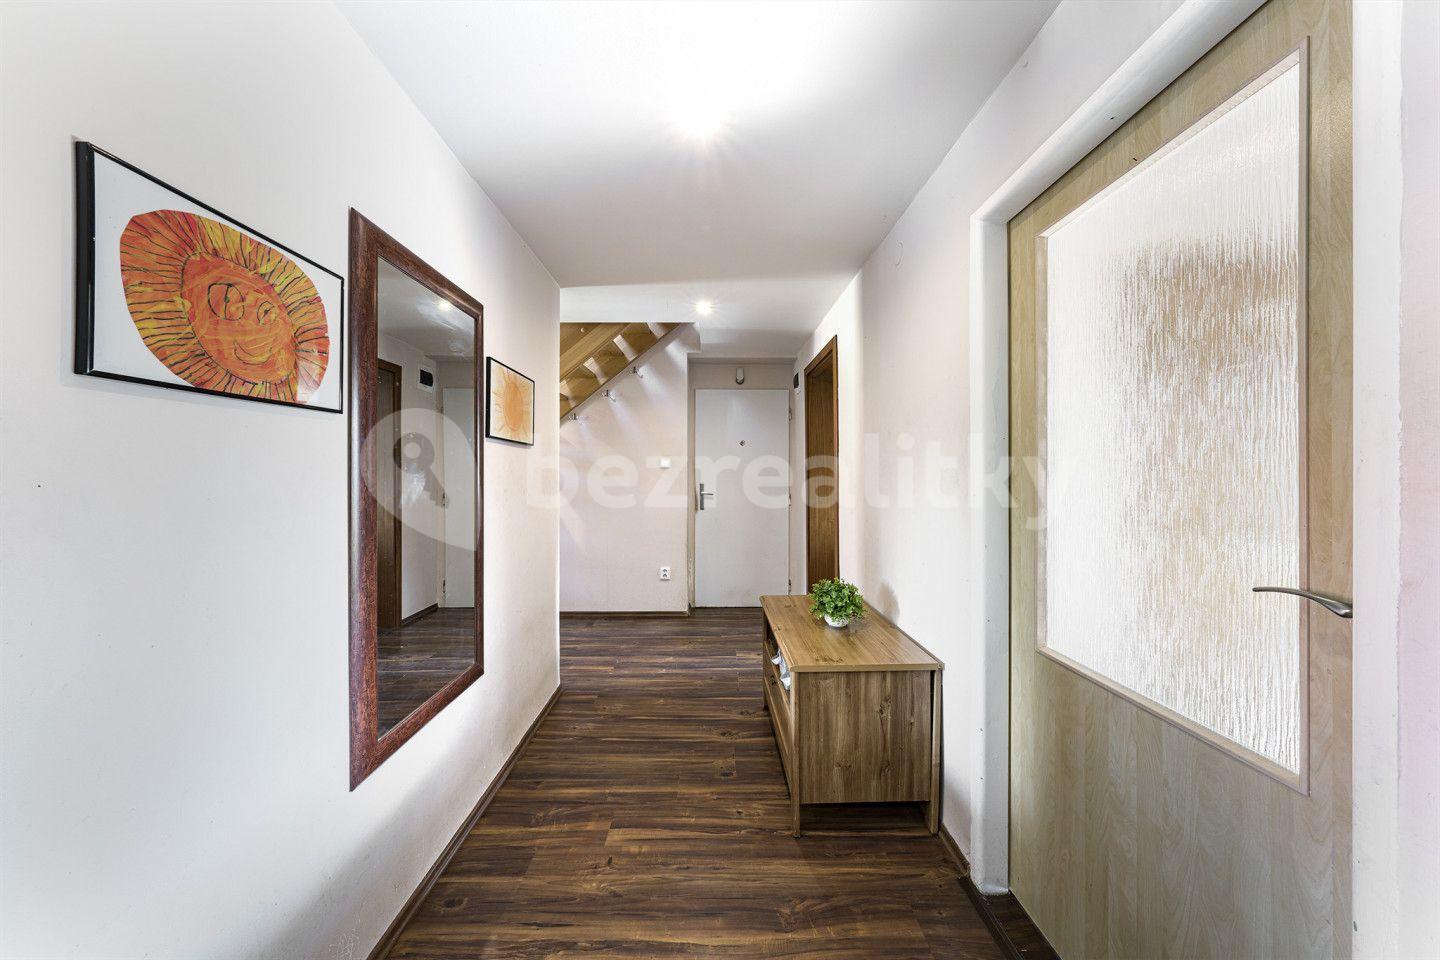 4 bedroom flat for sale, 144 m², U stadionu, Meziboří, Ústecký Region